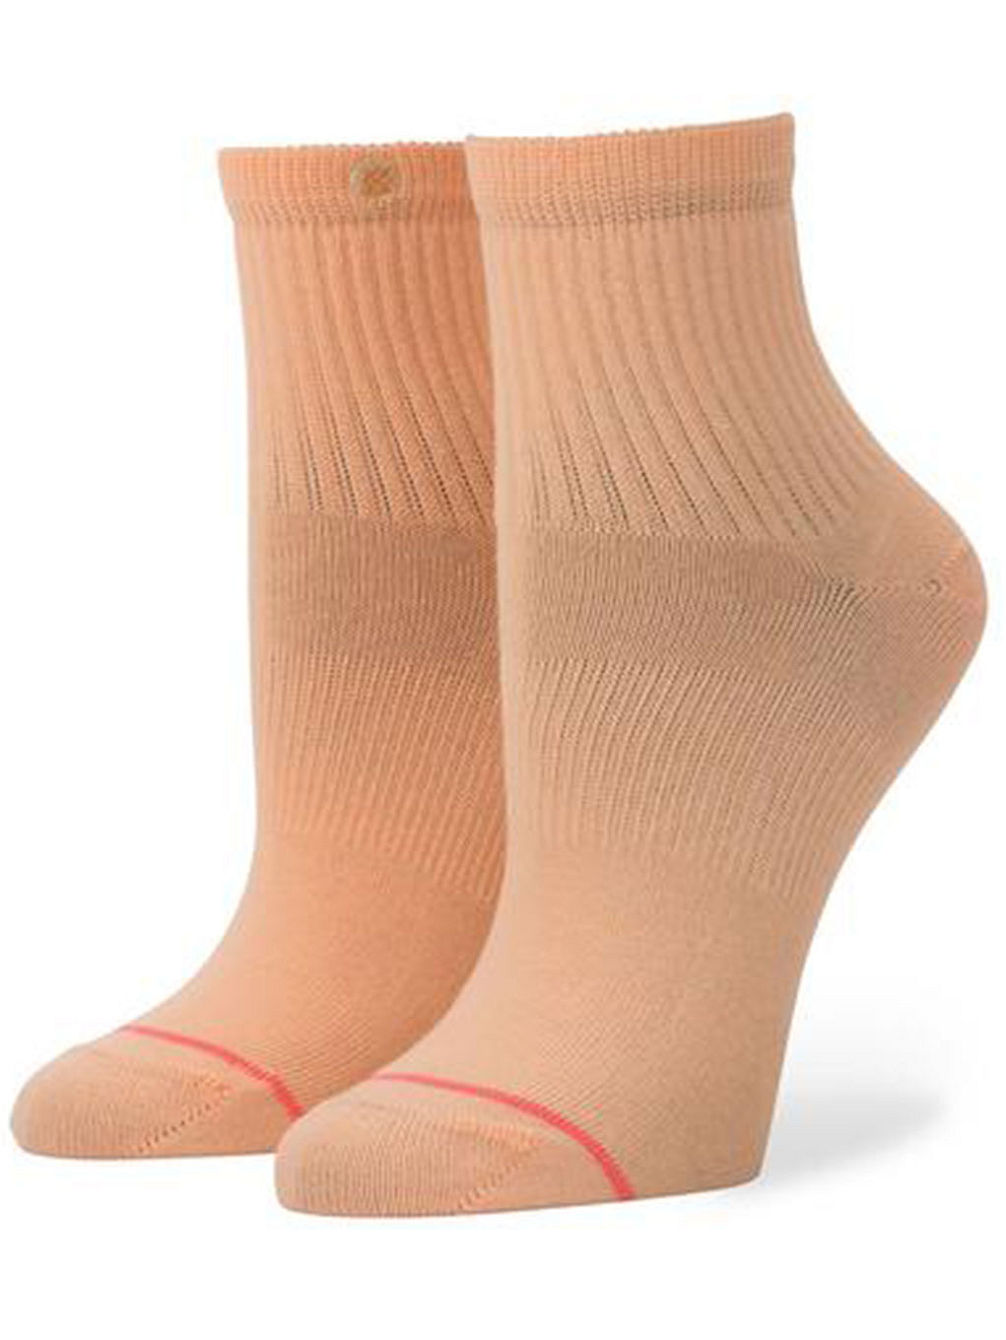 Uncommon Classic Lowrider Socks